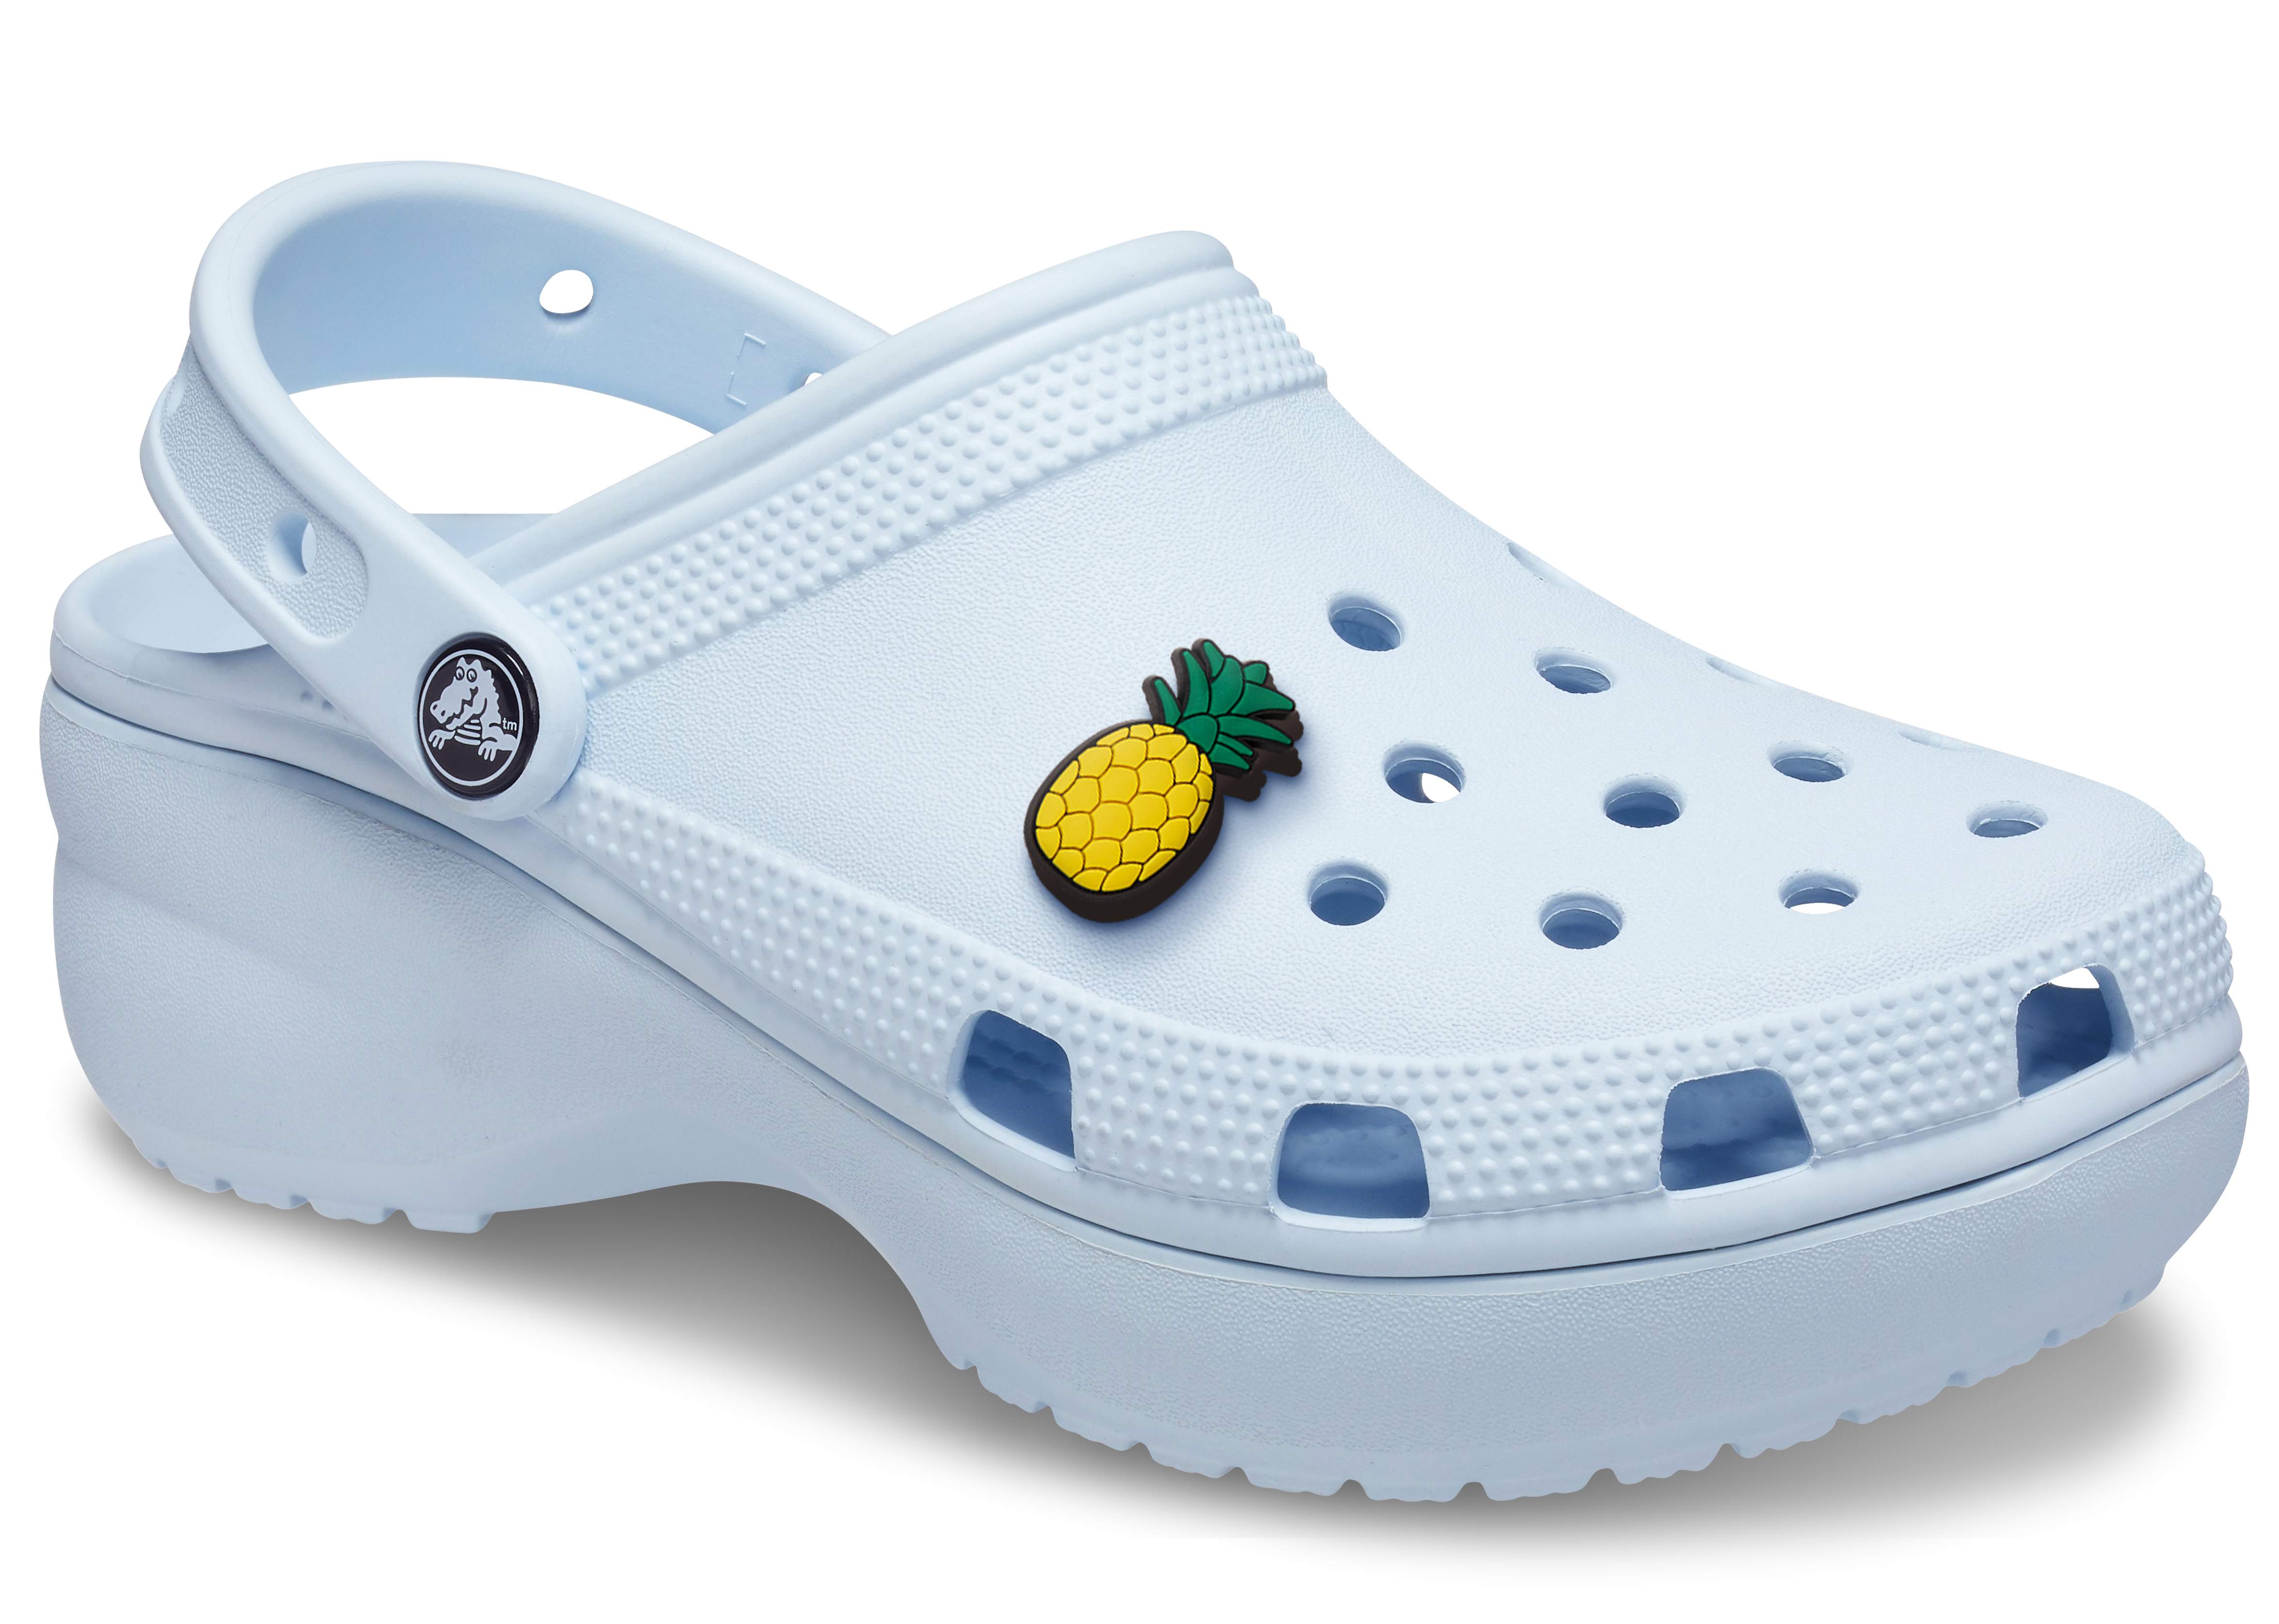 platform crocs white